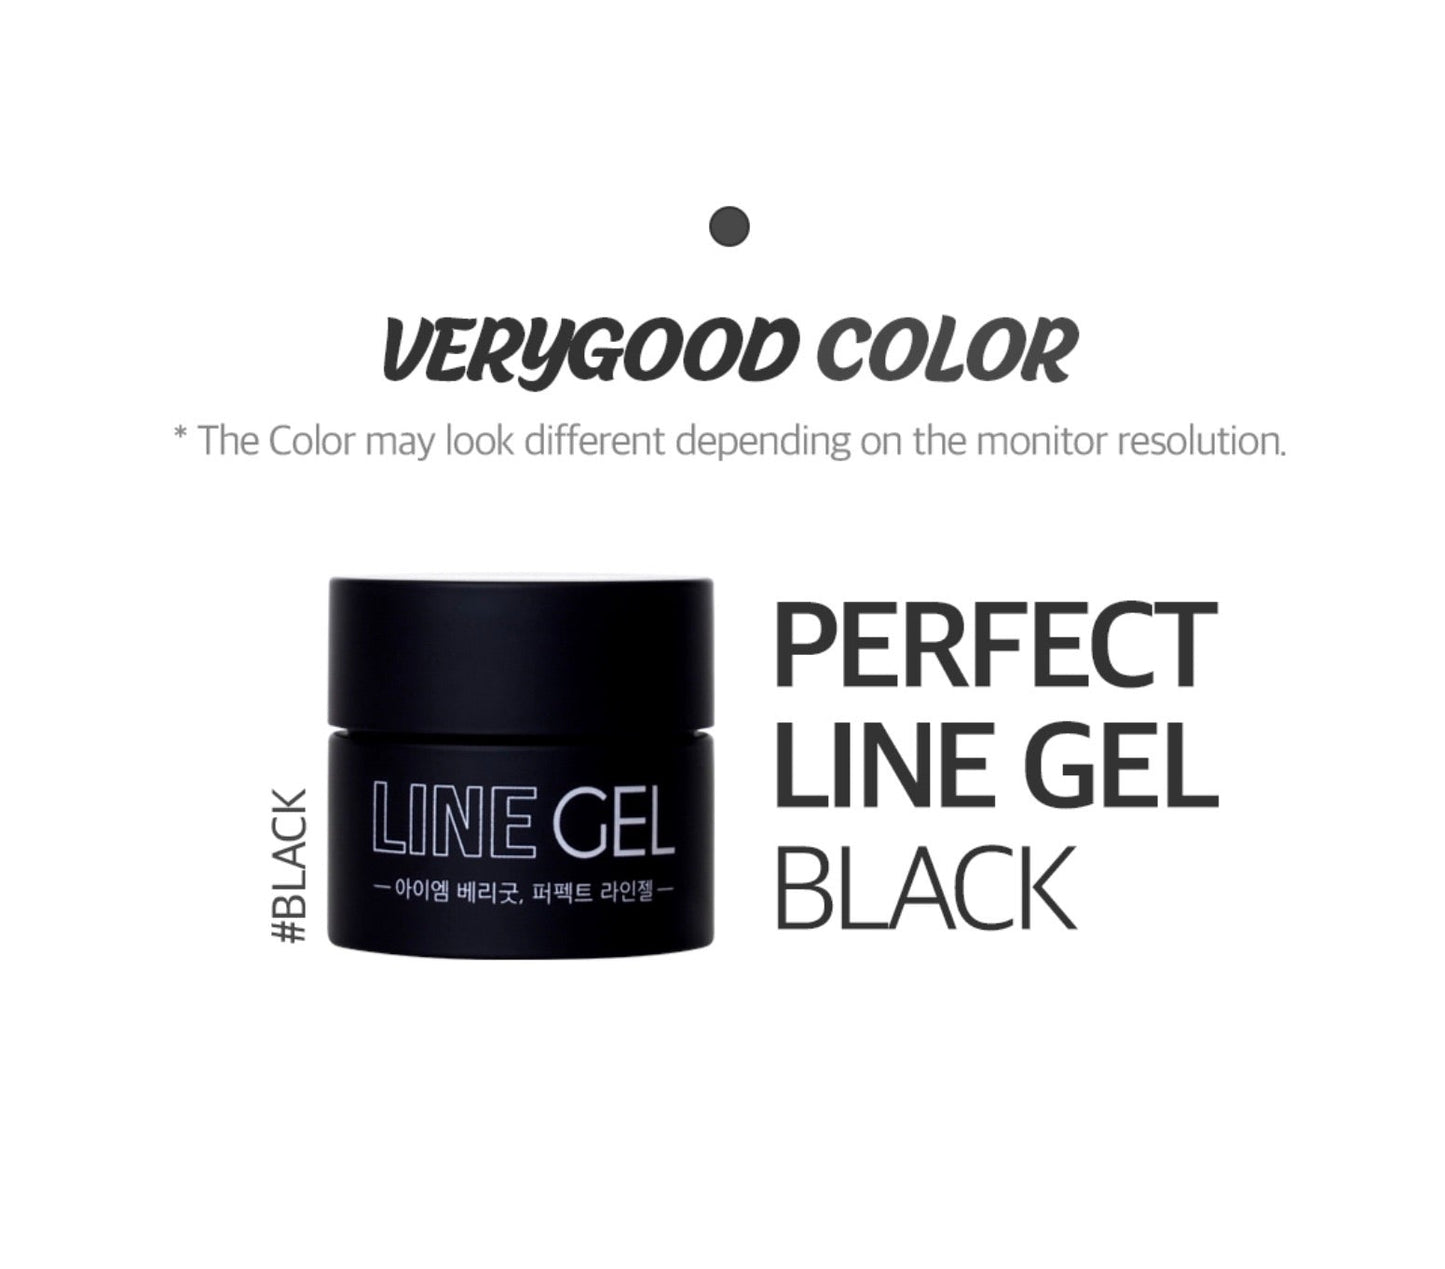 VERY GOOD NAIL perfect line gel - black